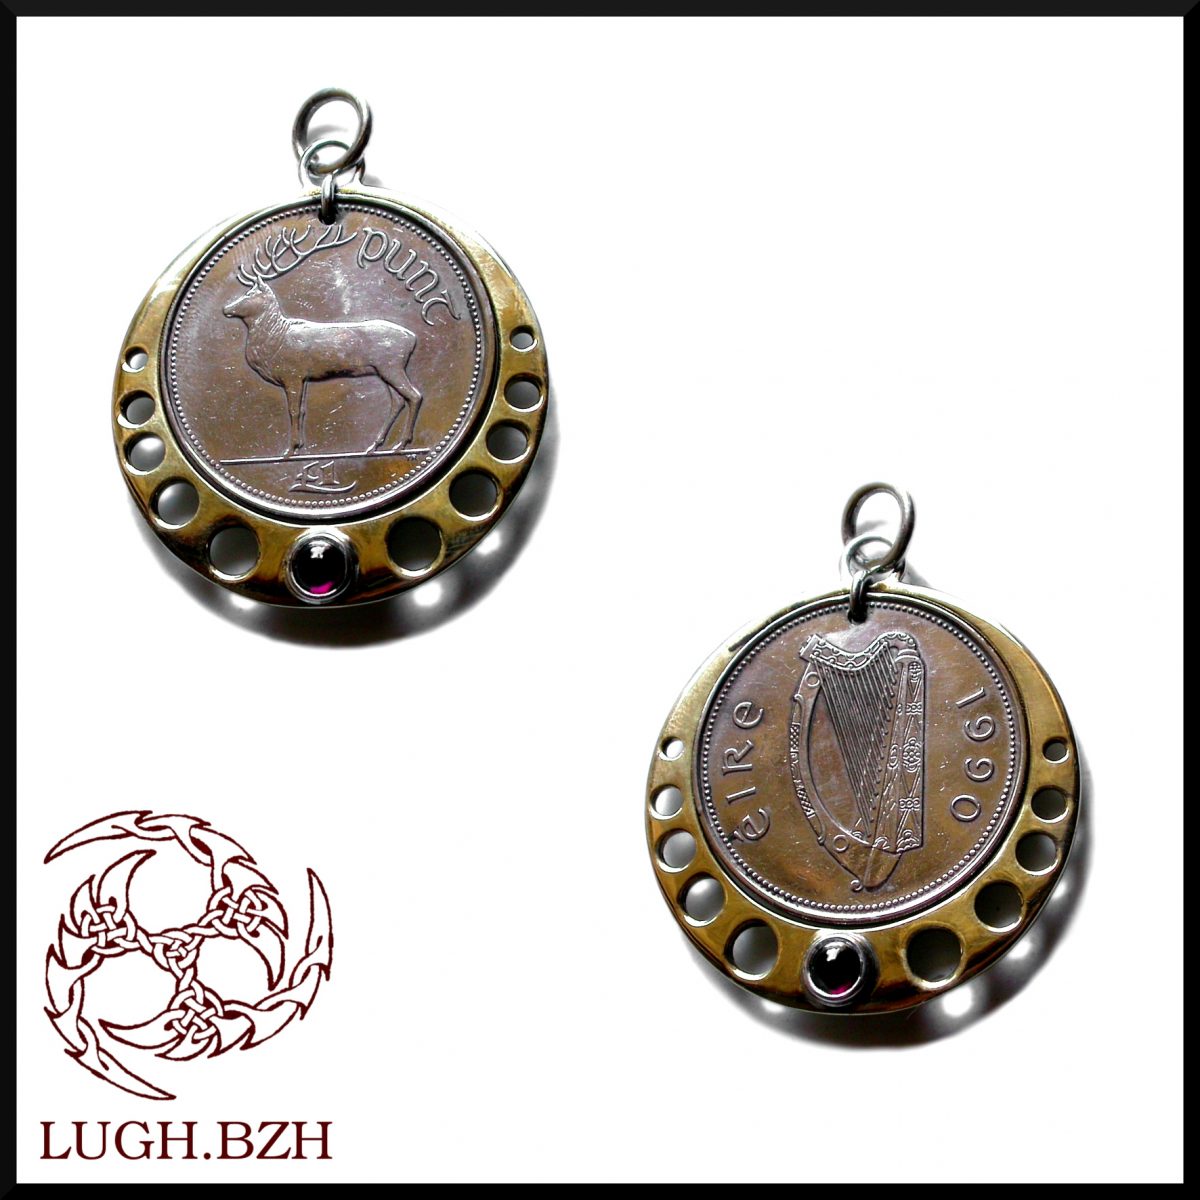 Quid - Amulette en argent, bronze, grenat et Livre irlandaise - Silver, bronze, garnet and irish Punt amulet